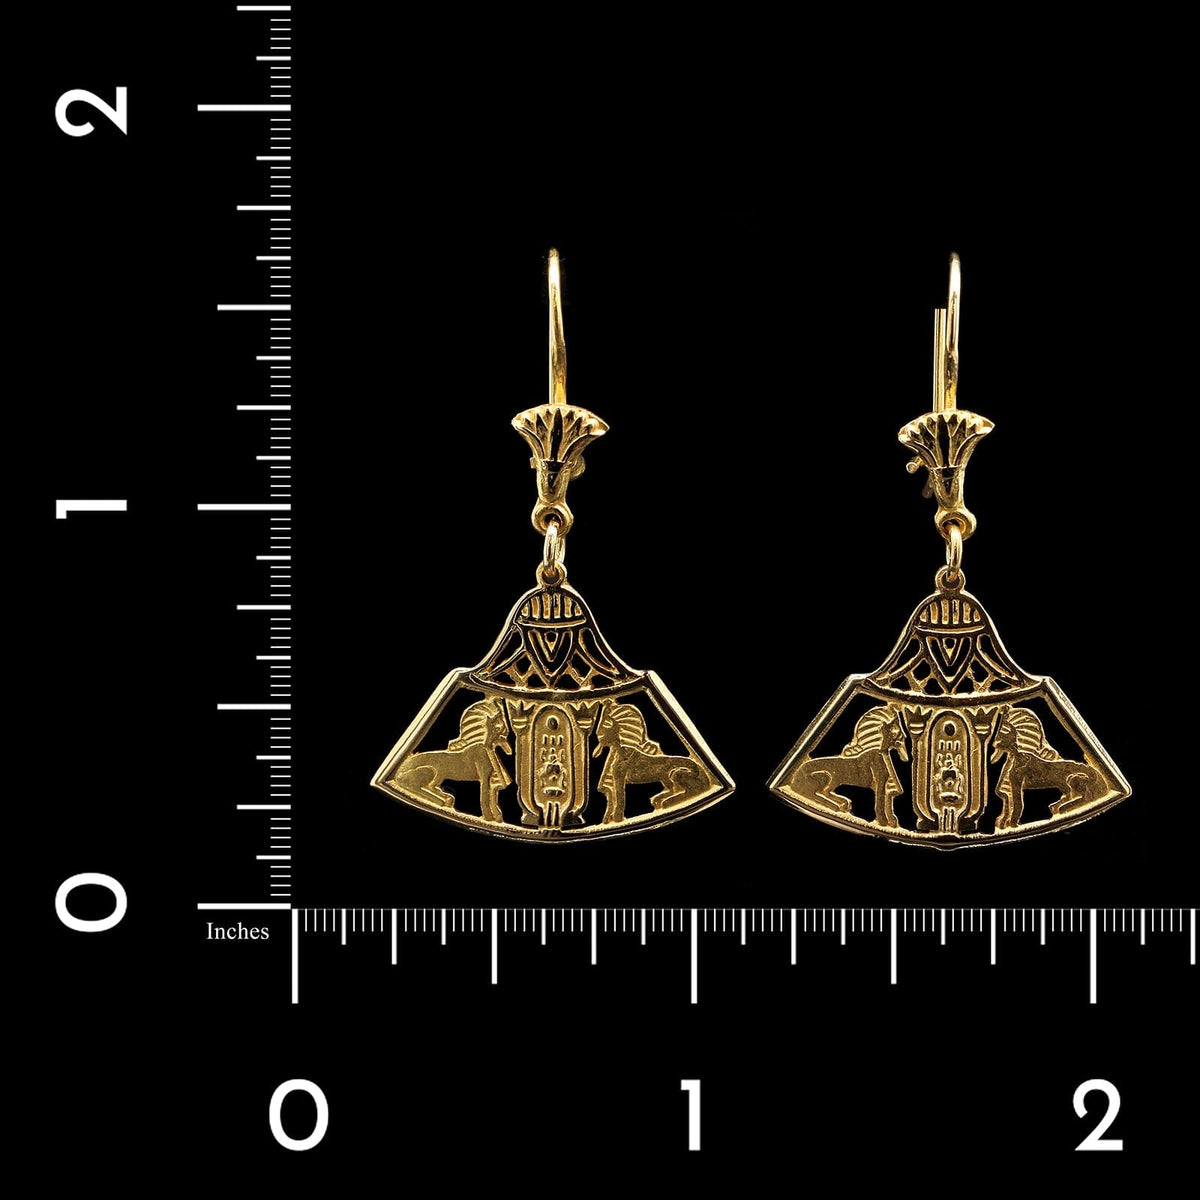 18K Yellow Gold Estate Egyptian Hieroglyphic Cartouche Drop Earrings